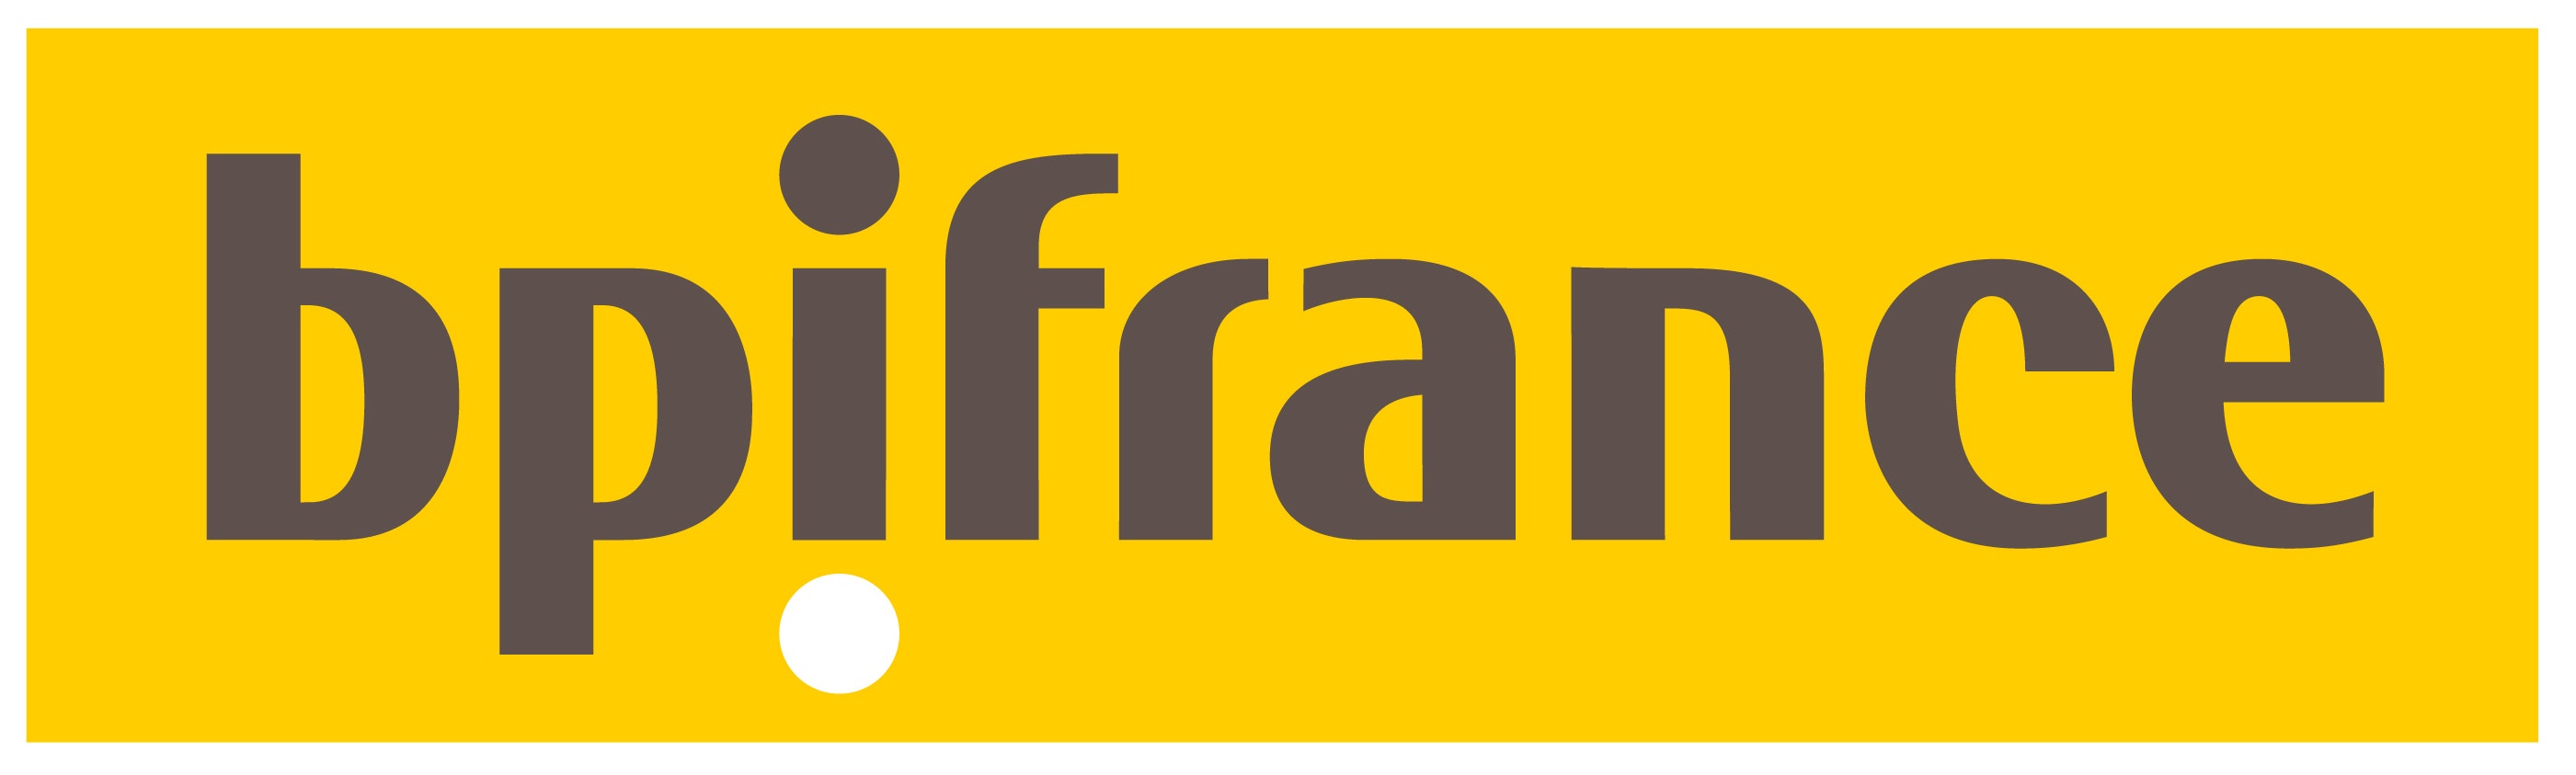 Logo Bpifrance Partenaire Sans Baseline Web 2